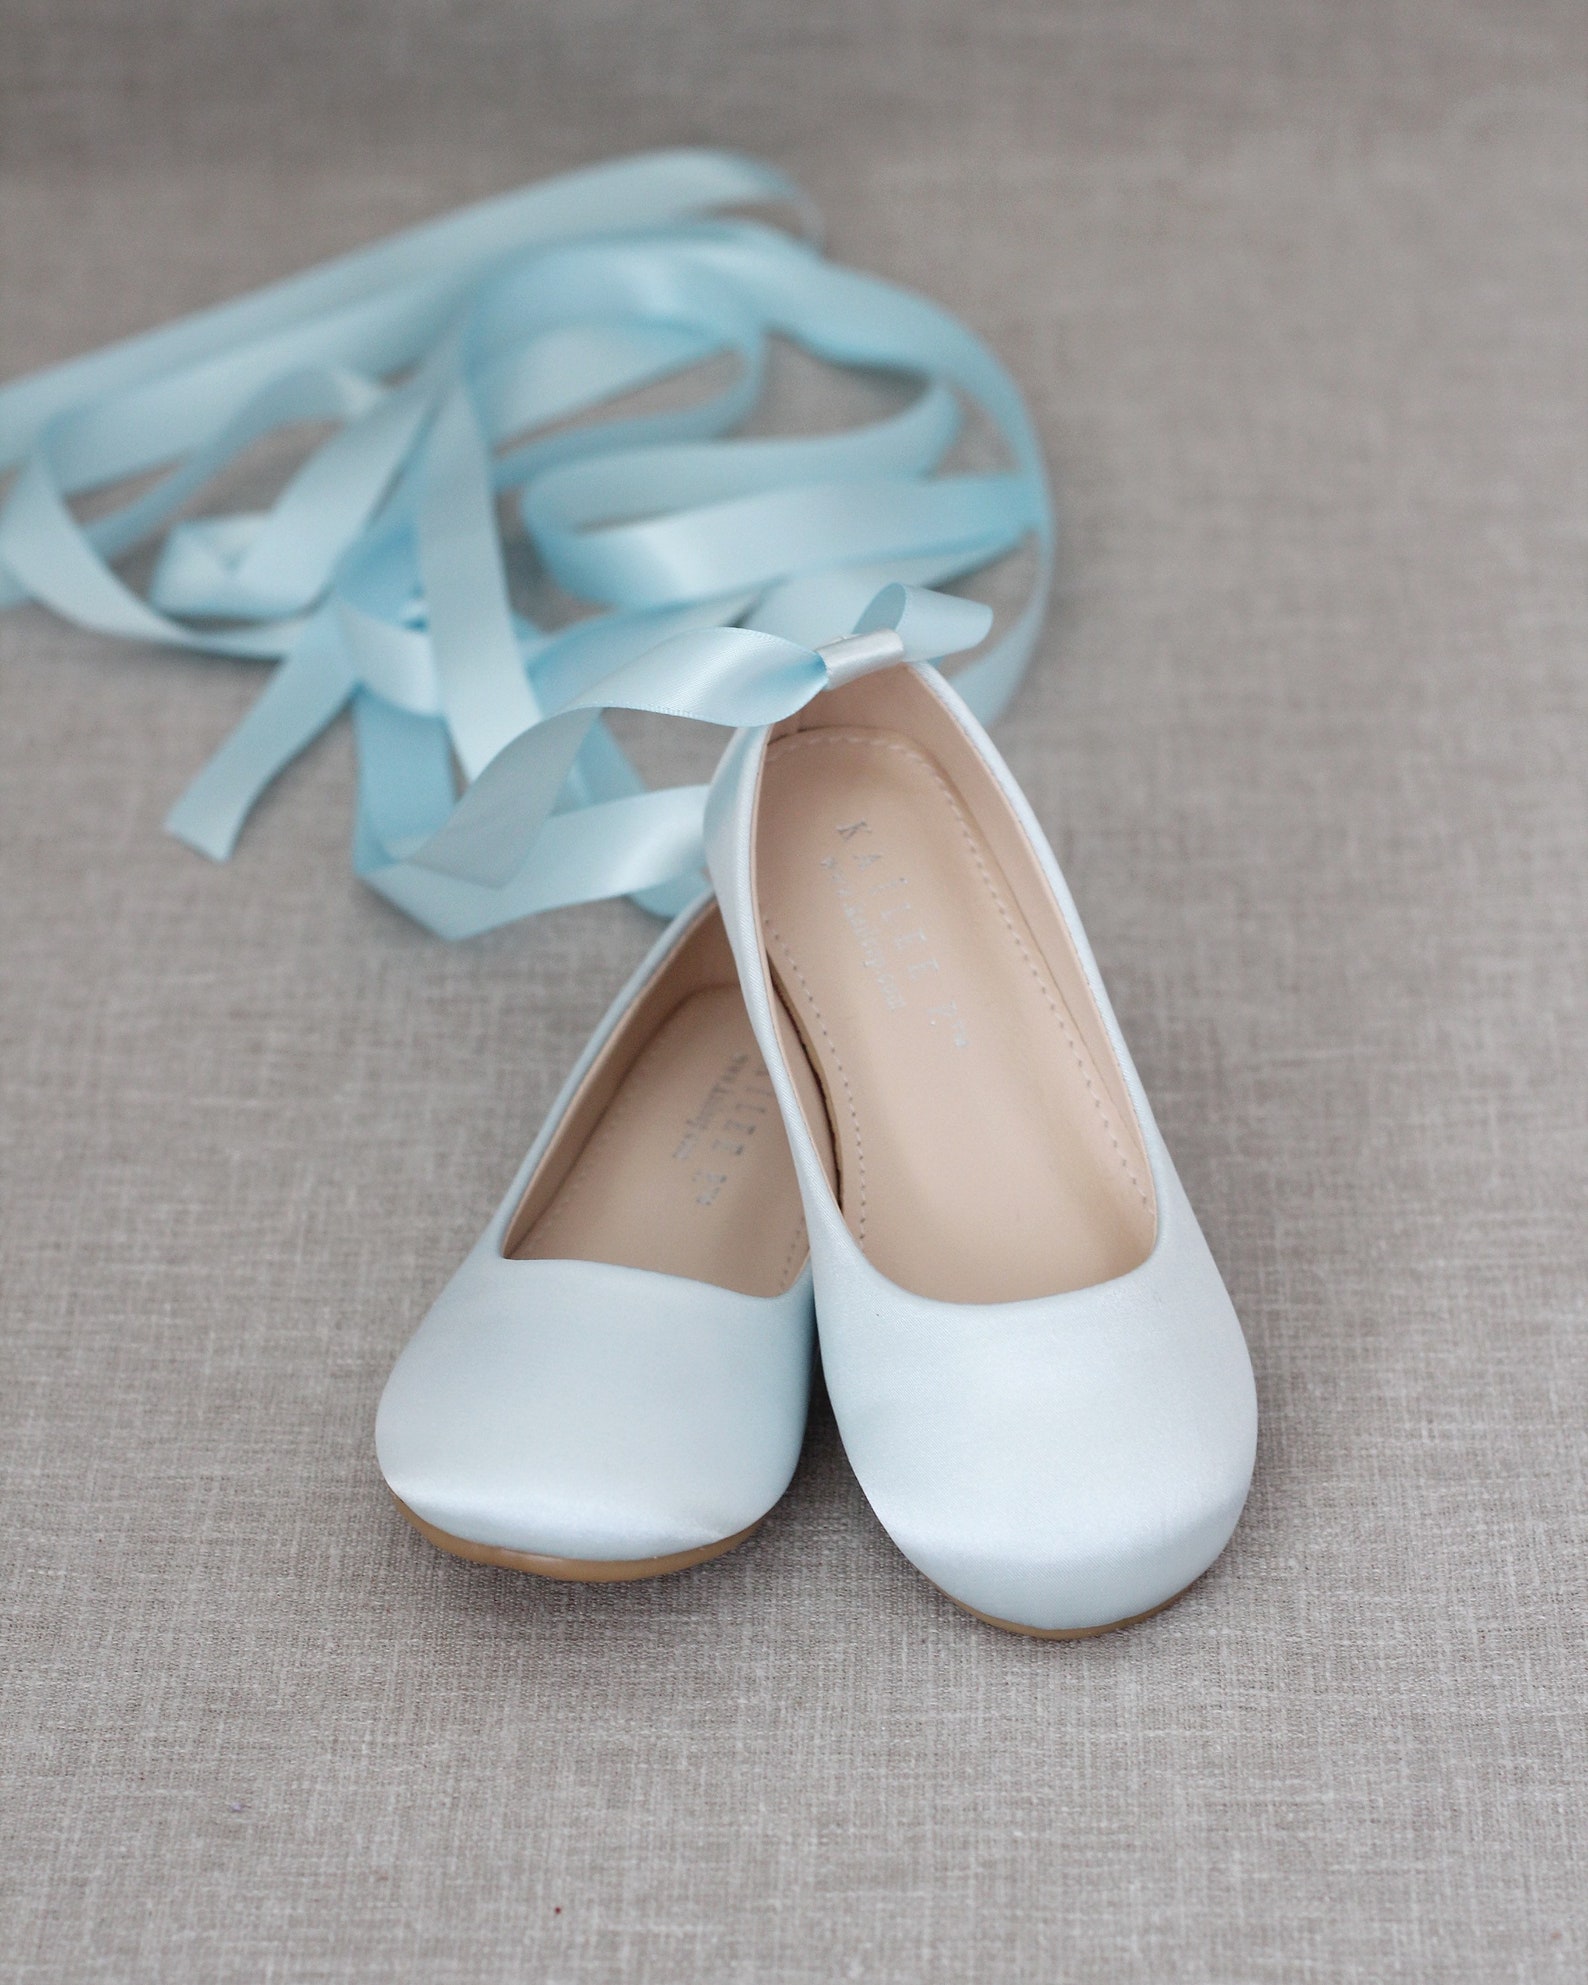 Kids Shoes LIGHT BLUE Satin Ballerina Lace up Flats Satin - Etsy